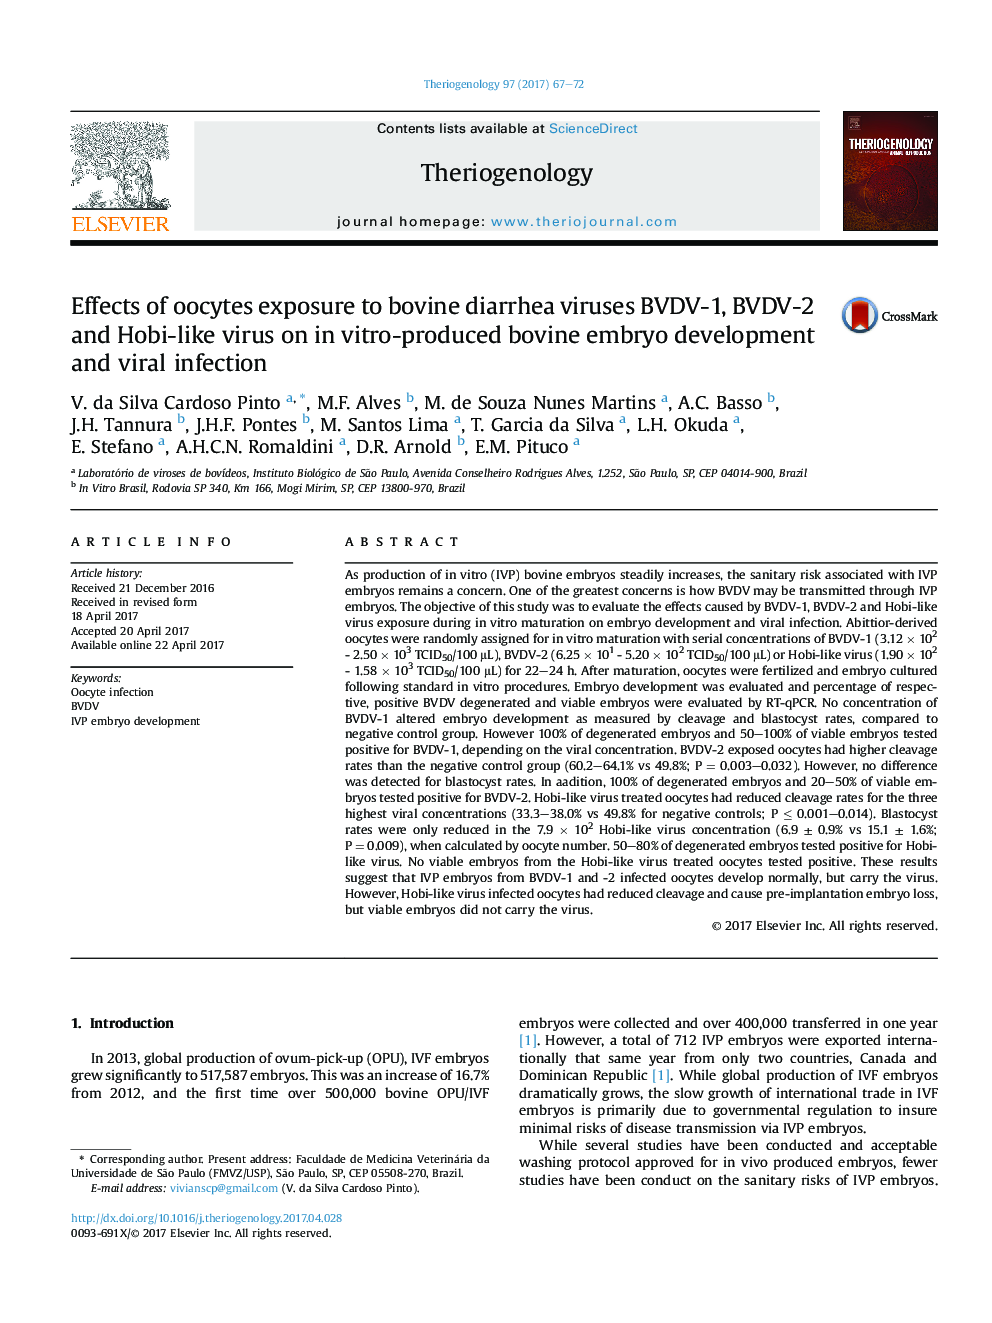 Effects of oocytes exposure to bovine diarrhea viruses BVDV-1, BVDV-2 and Hobi-like virus on inÂ vitro-produced bovine embryo development and viral infection